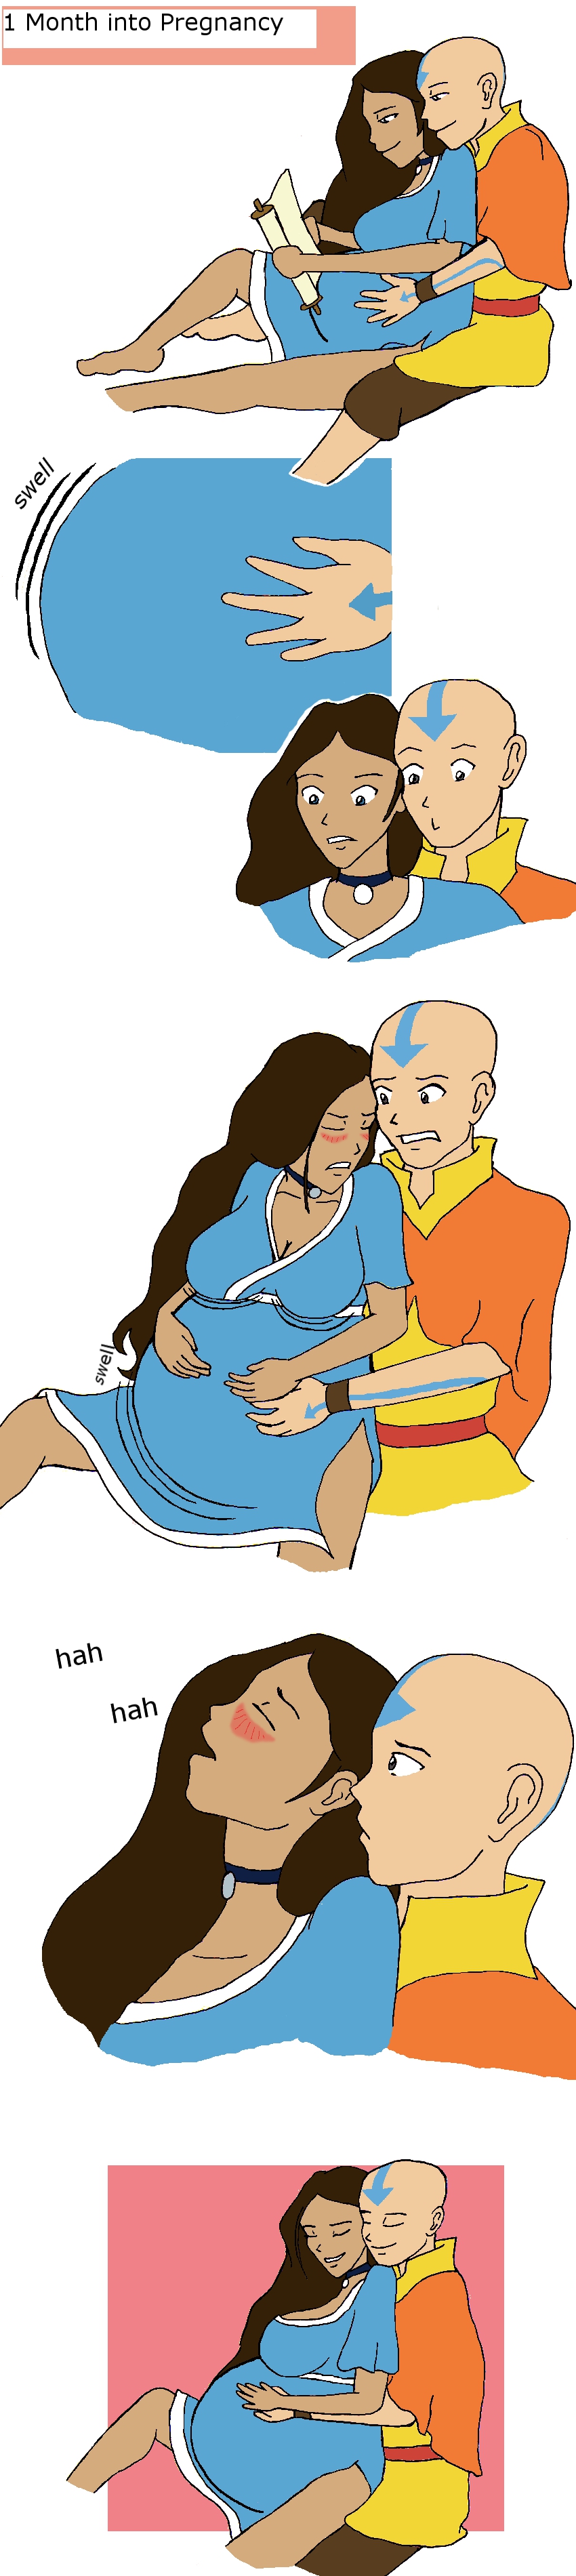 1 Month Into Pregnancy By Weebie3 On DeviantArt.